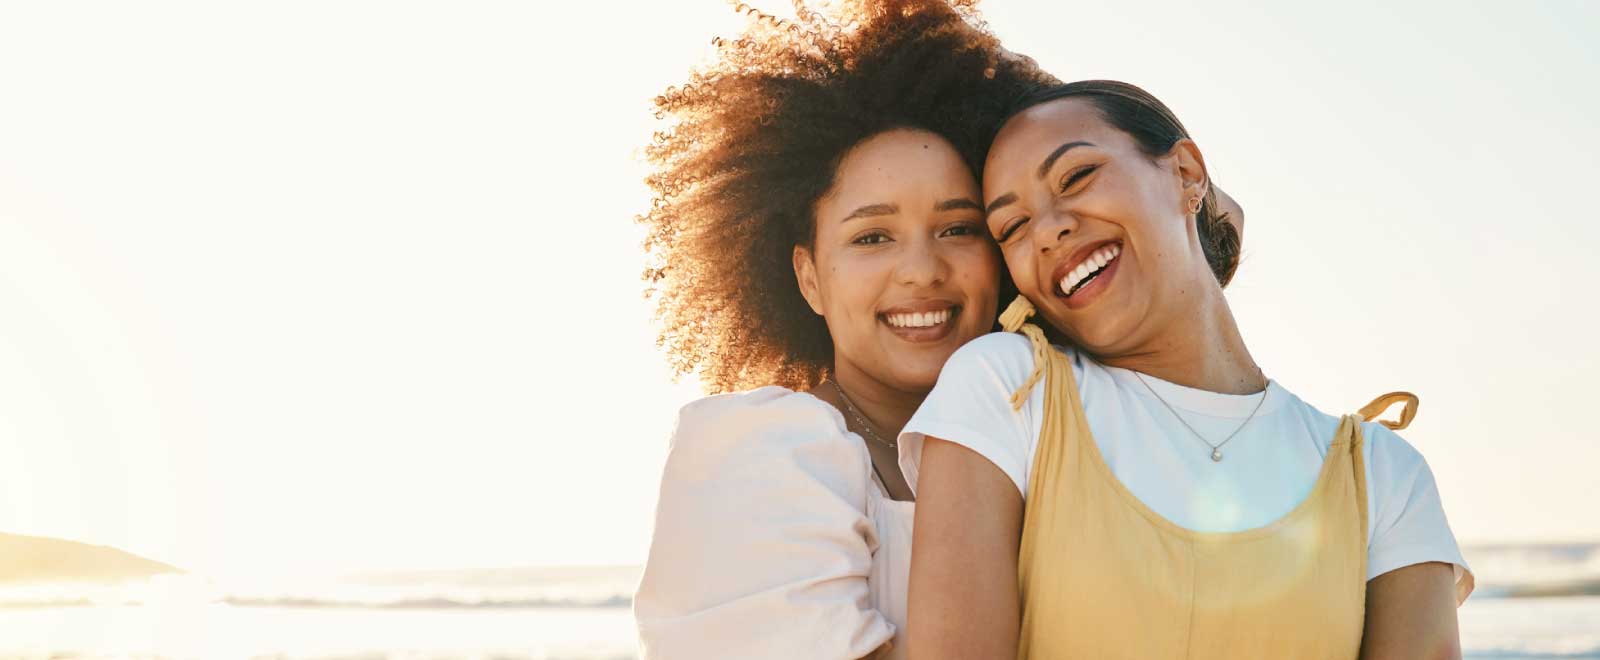 Two smiling women enjoying a sunny day at the beach, symbolizing the joy and freedom of saving money.